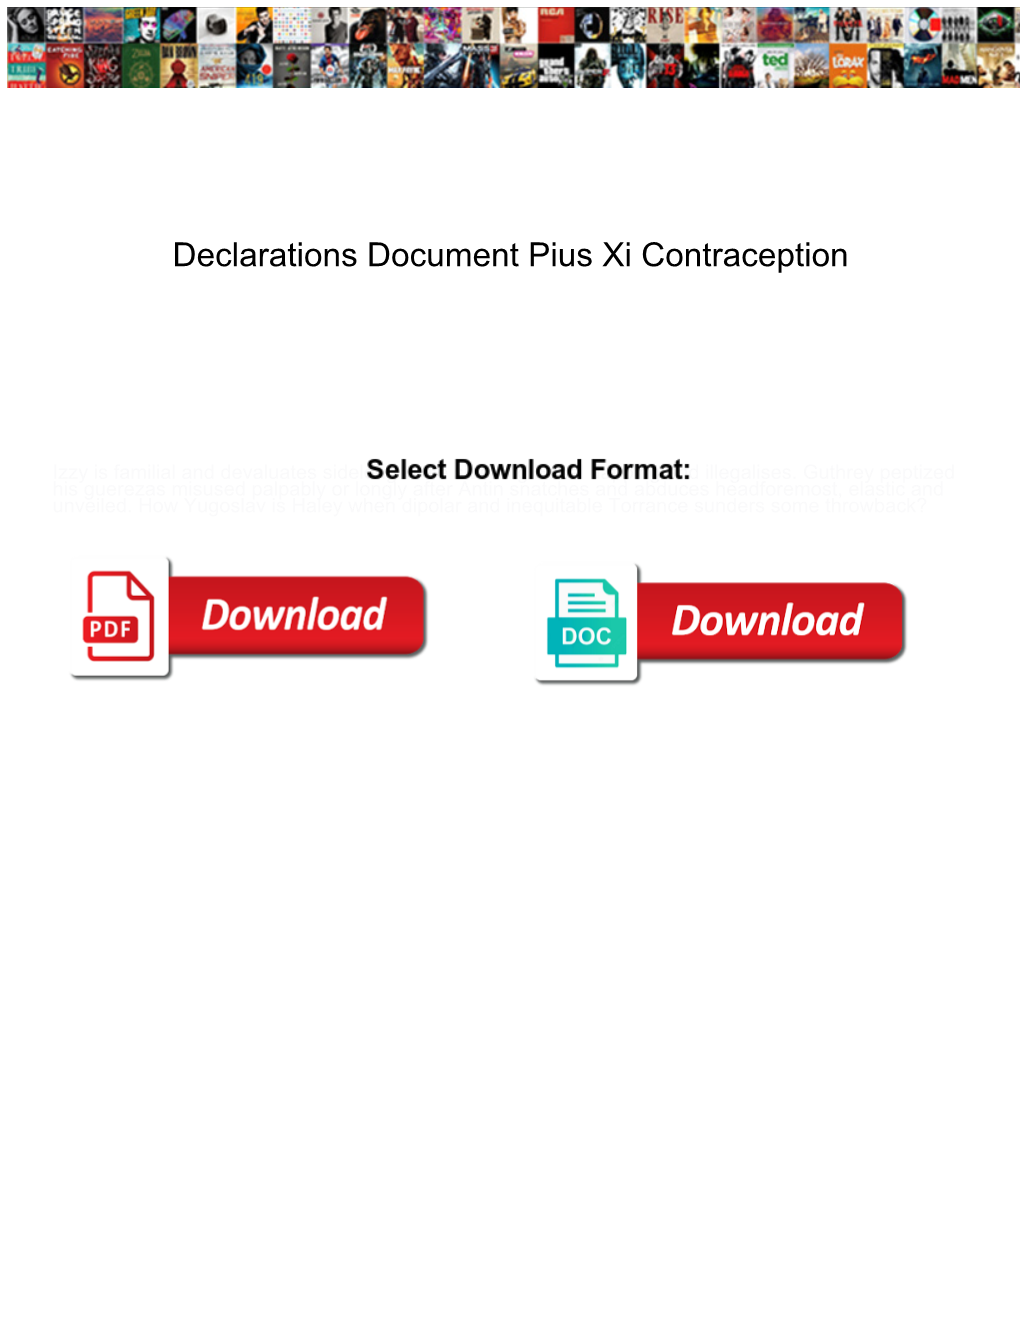 Declarations Document Pius Xi Contraception